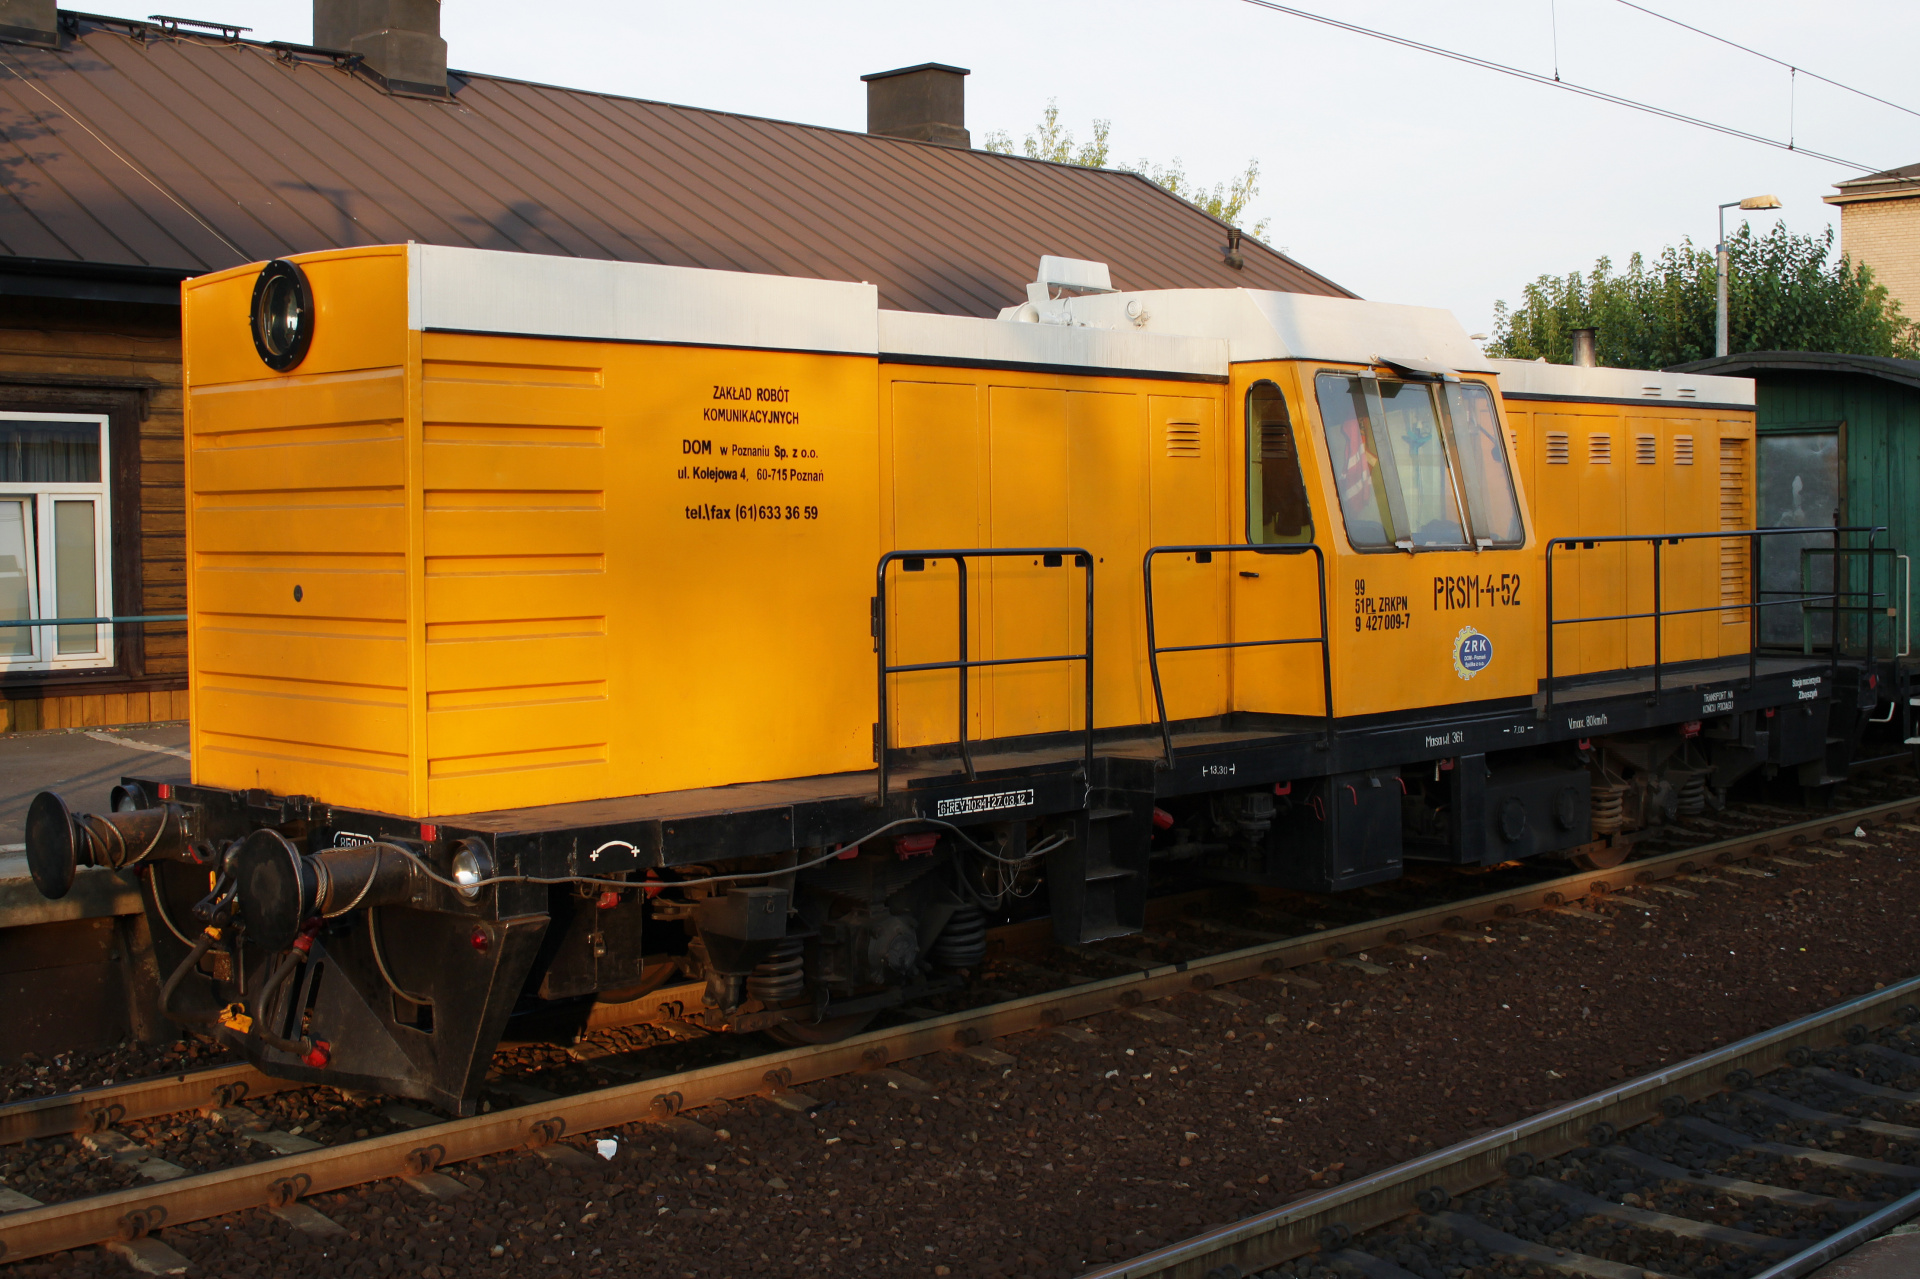 PRSM-4-52 (Vehicles » Trains and Locomotives » Maintenance)